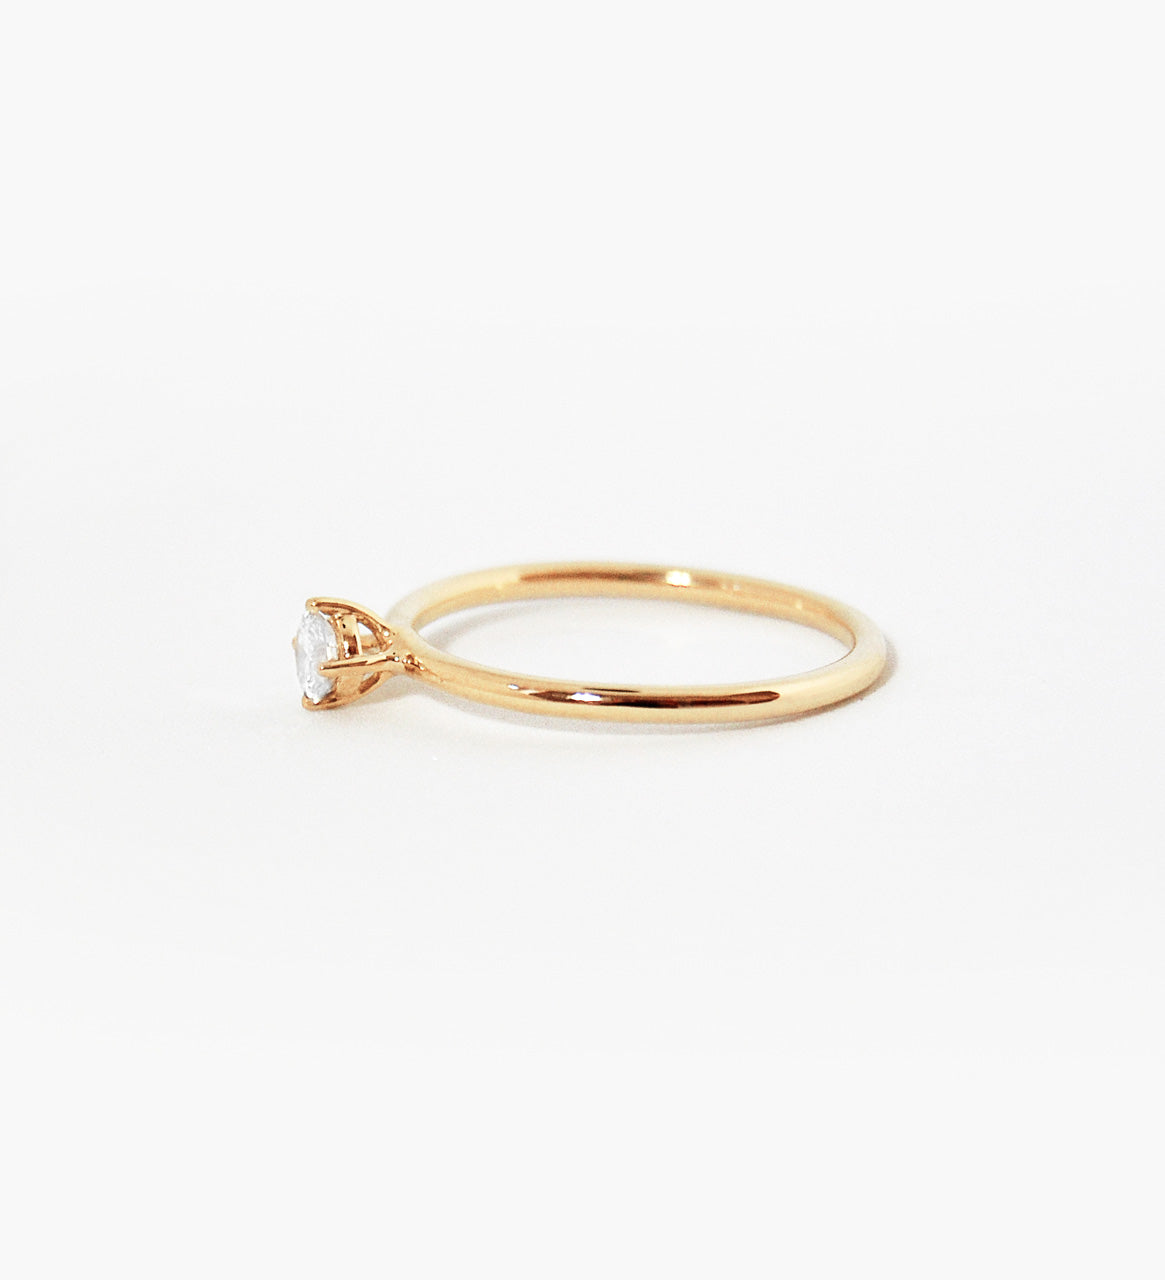 Malene Diamond 3.5  Ring - 14 Karat Gold White  Diamond